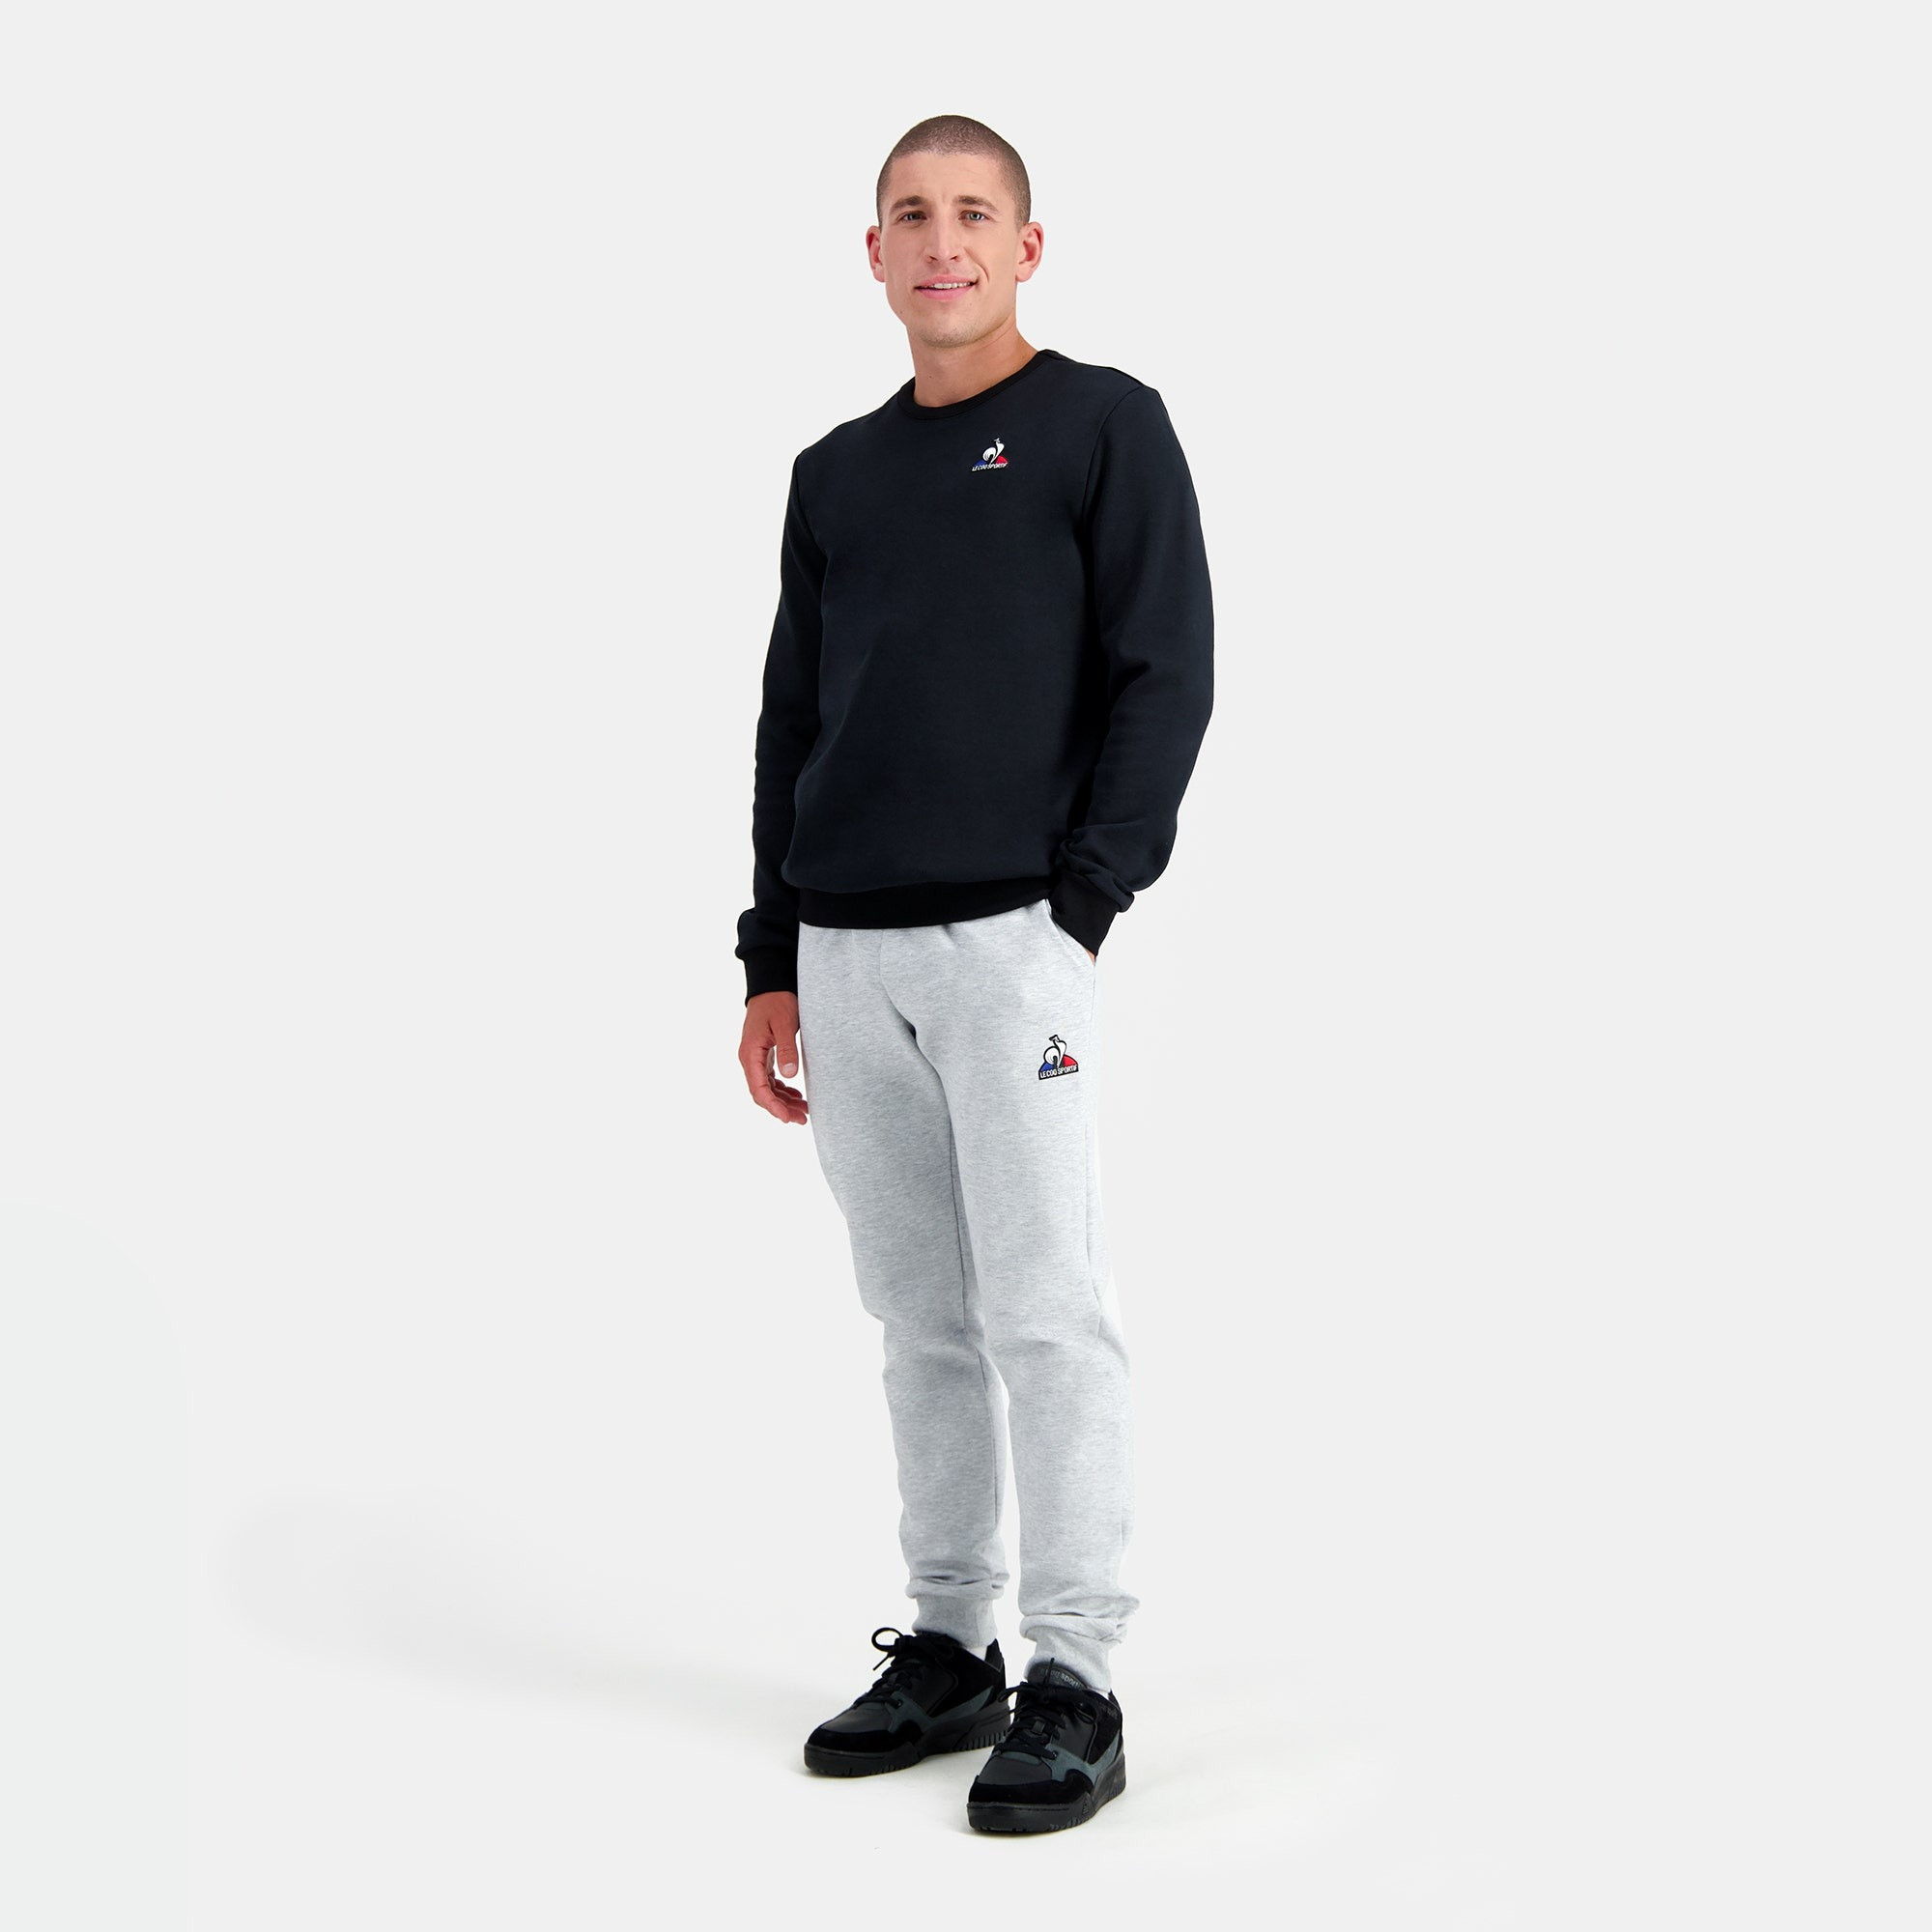 Le Coq Sportif Essentials crew sweatshirt for men - Black - 2310557